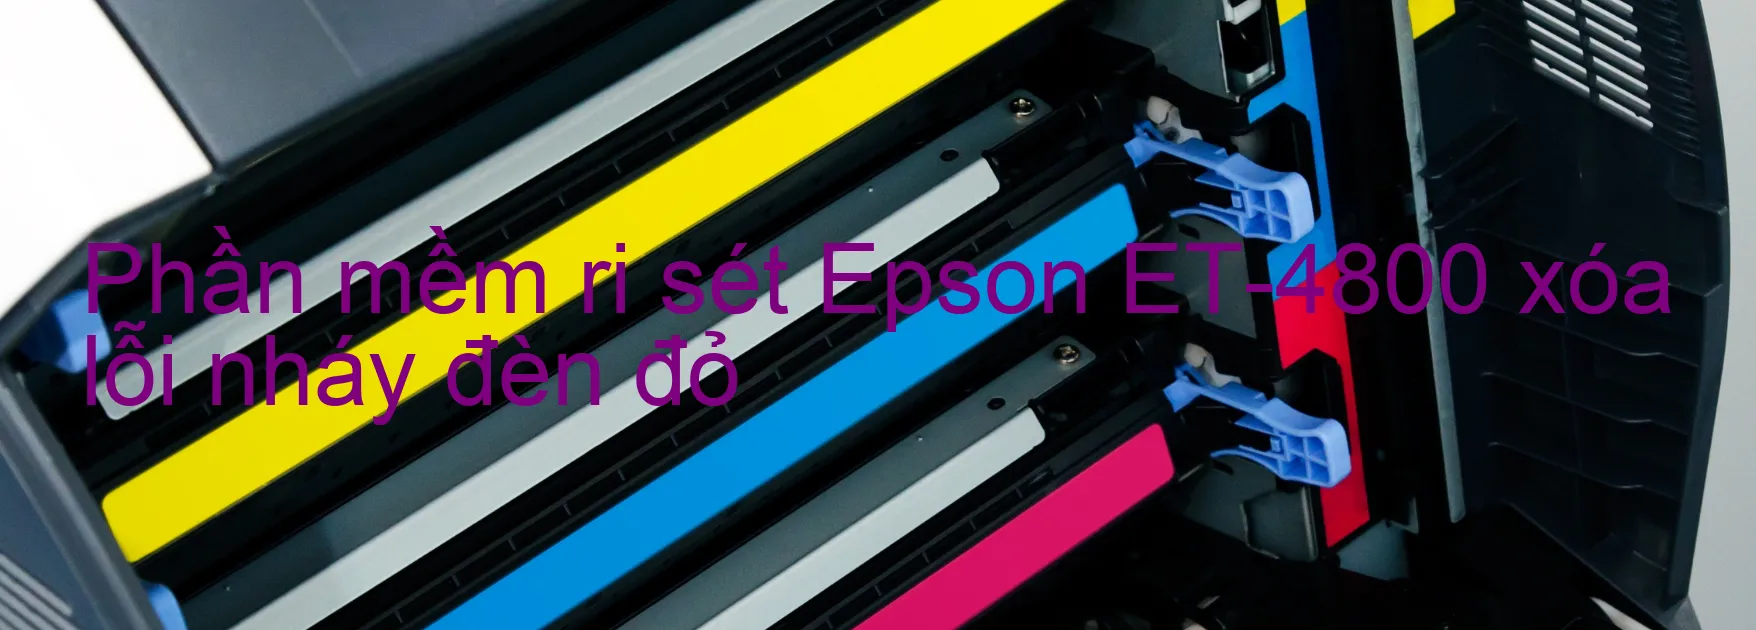 Phần mềm reset Epson ET-4800 xóa lỗi nháy đèn đỏ